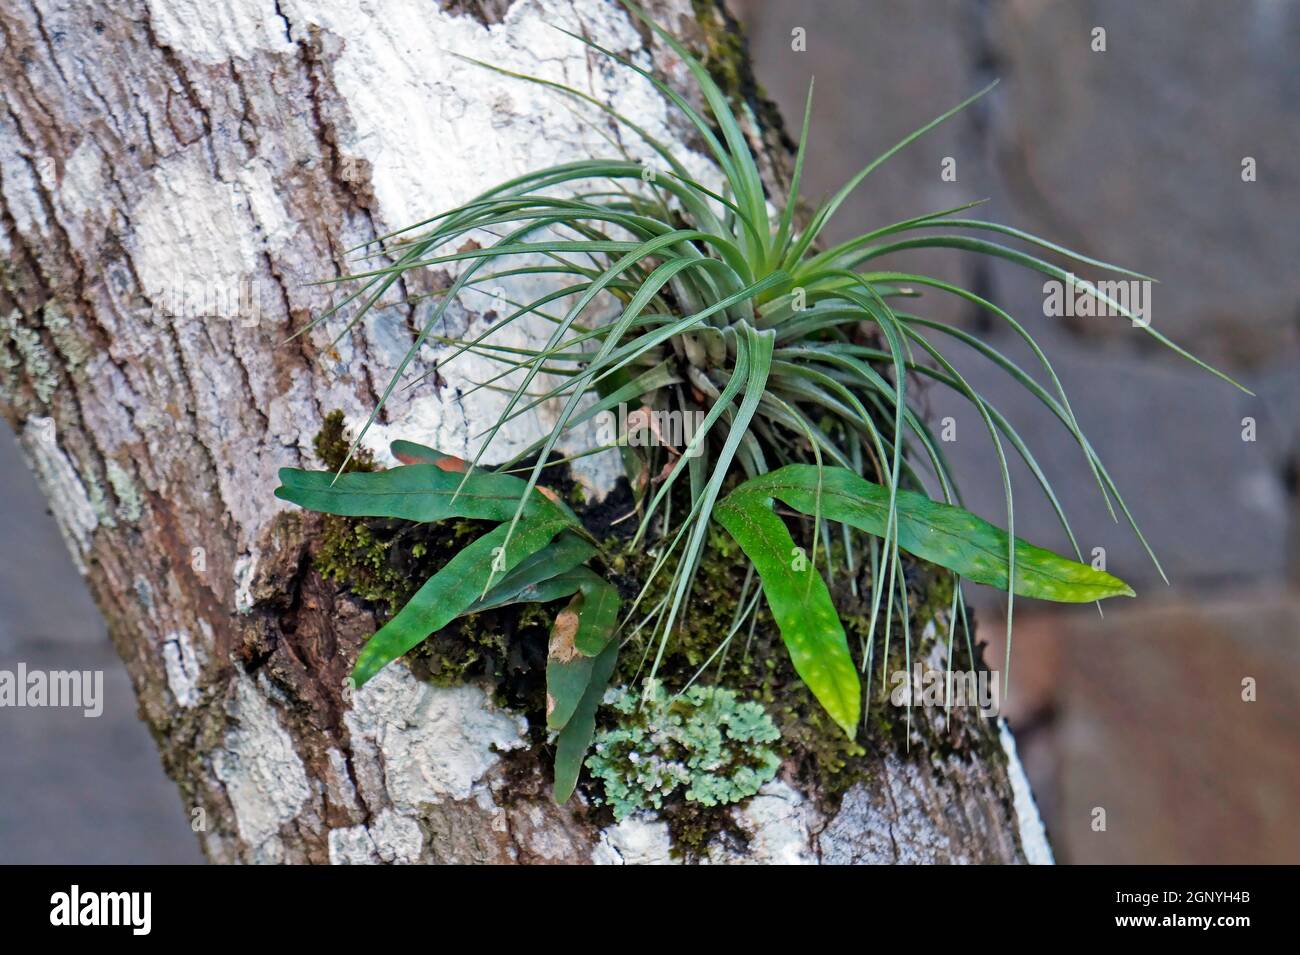 Epiphytic plants on tree trunk Stock Photo